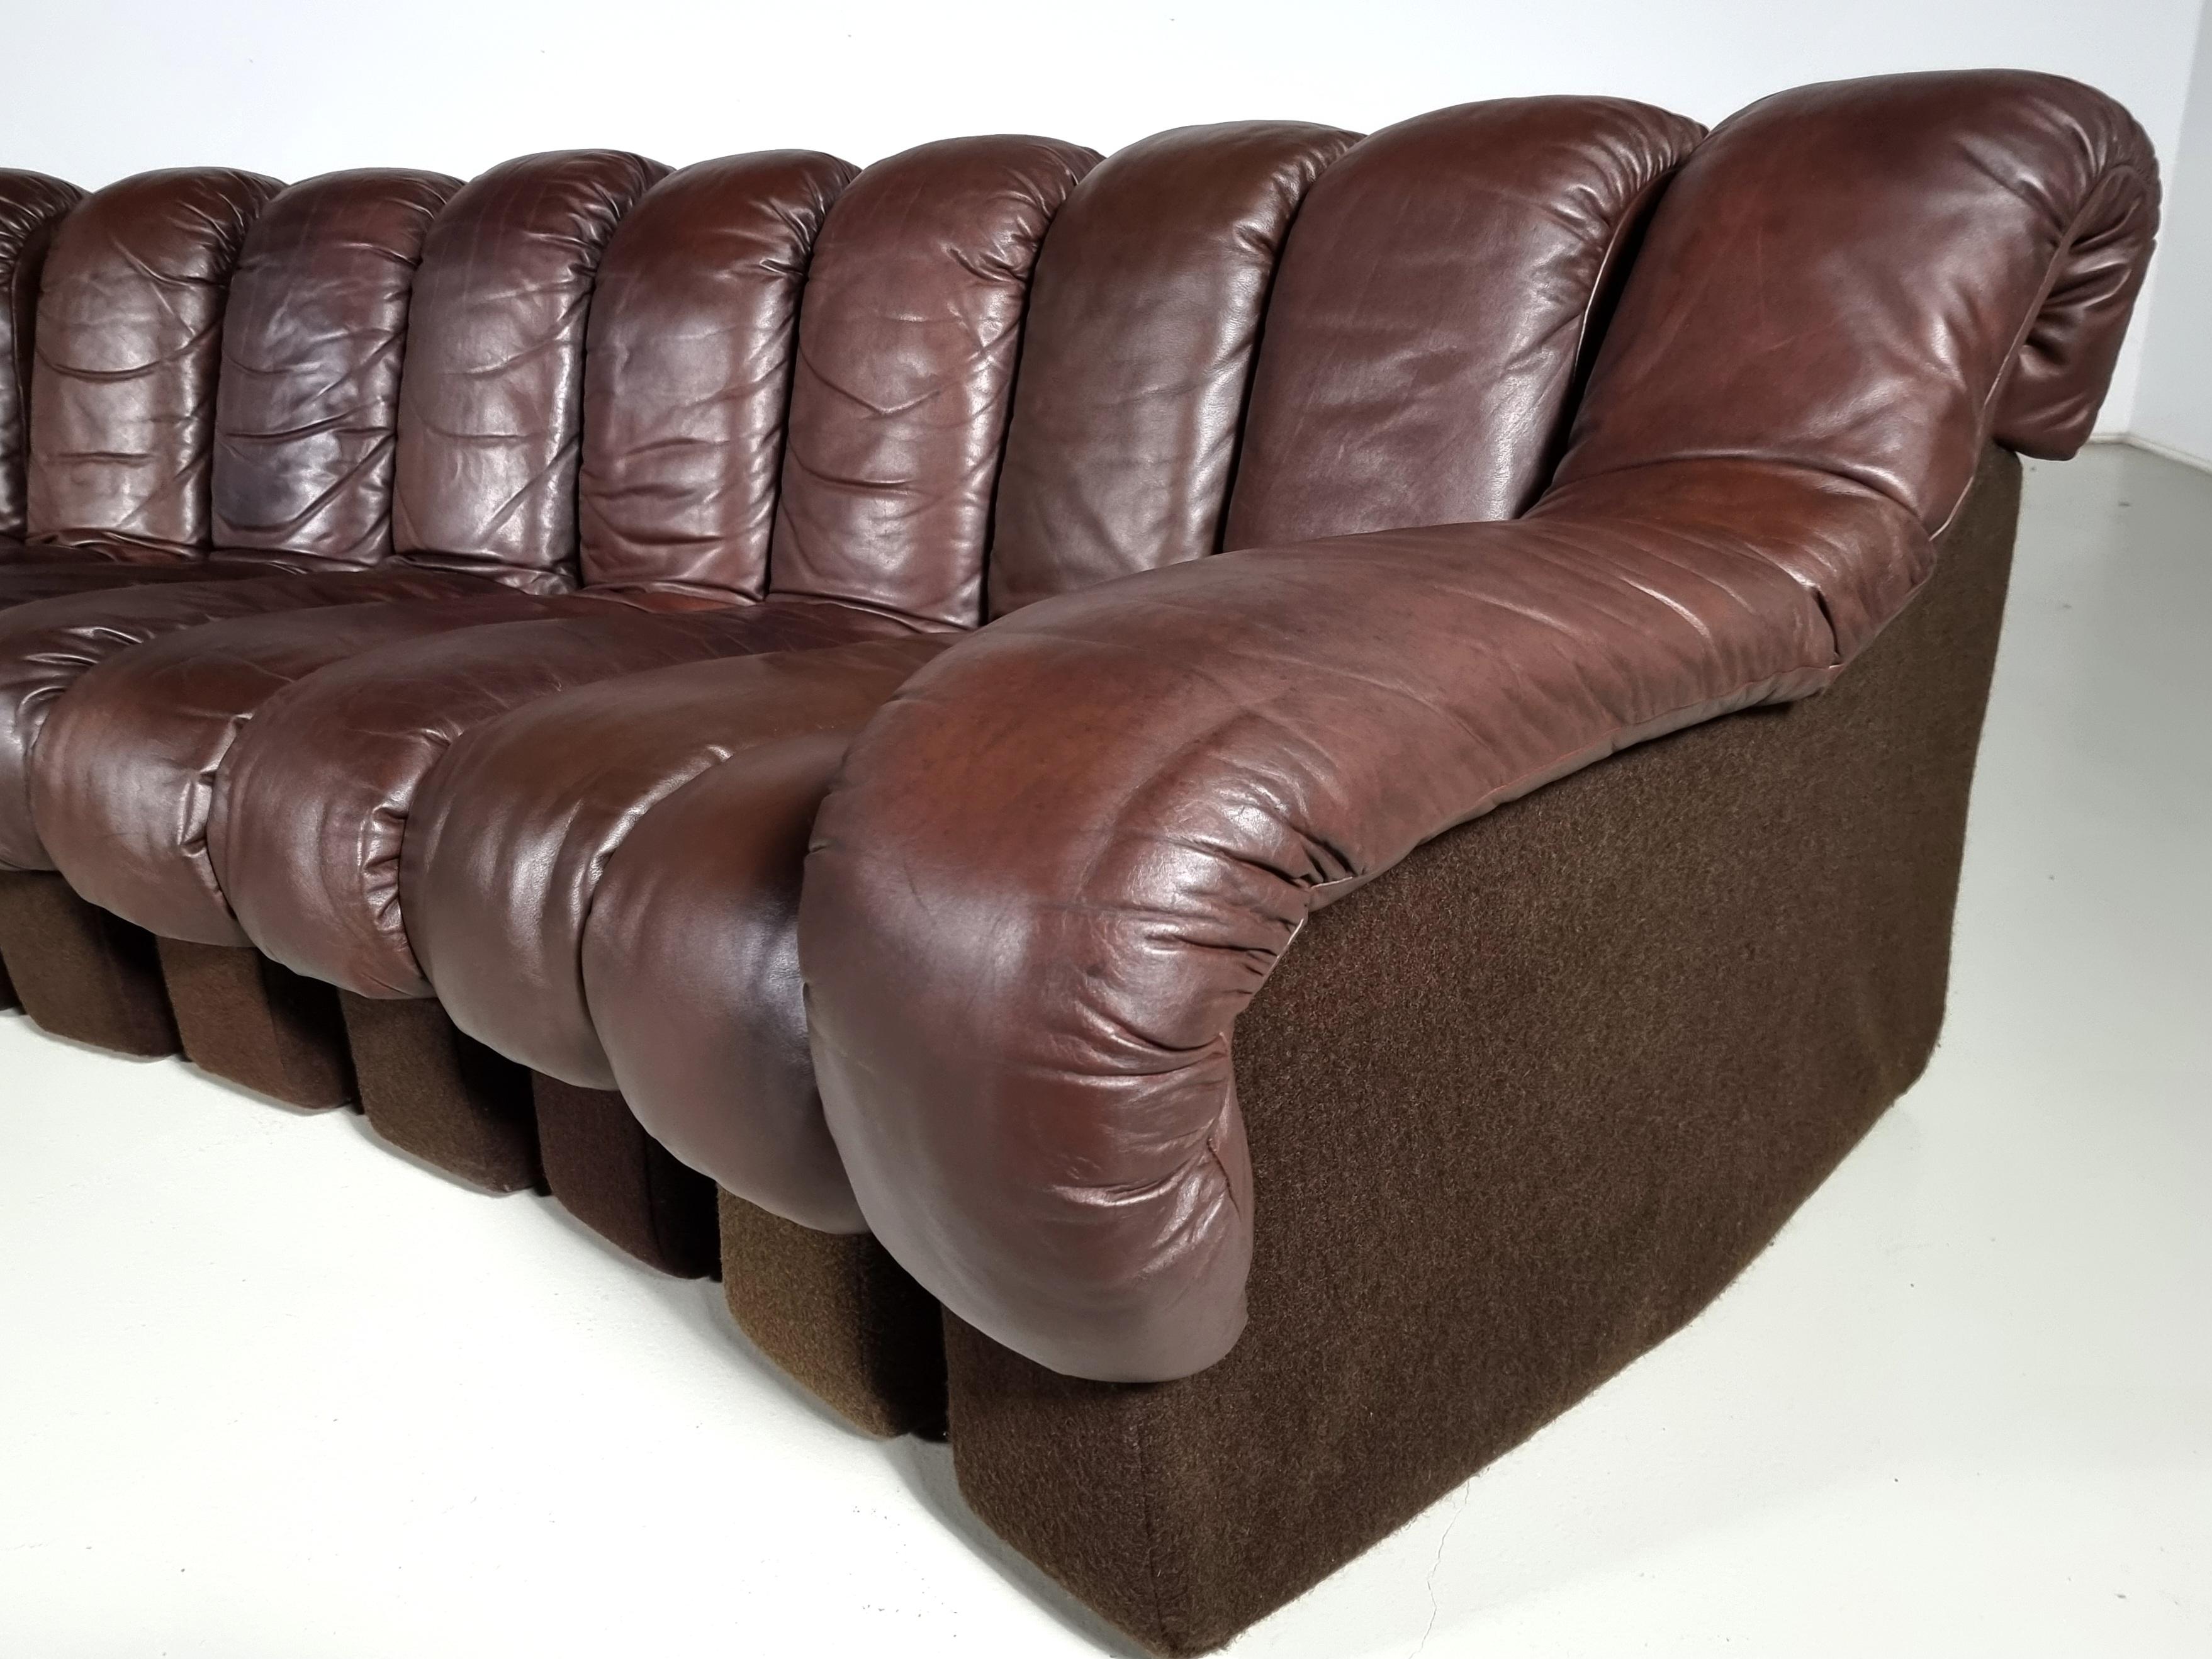 Ds-600 'Snake' Sofa in Original Leather by De Sede Switzerland, 1970s 5